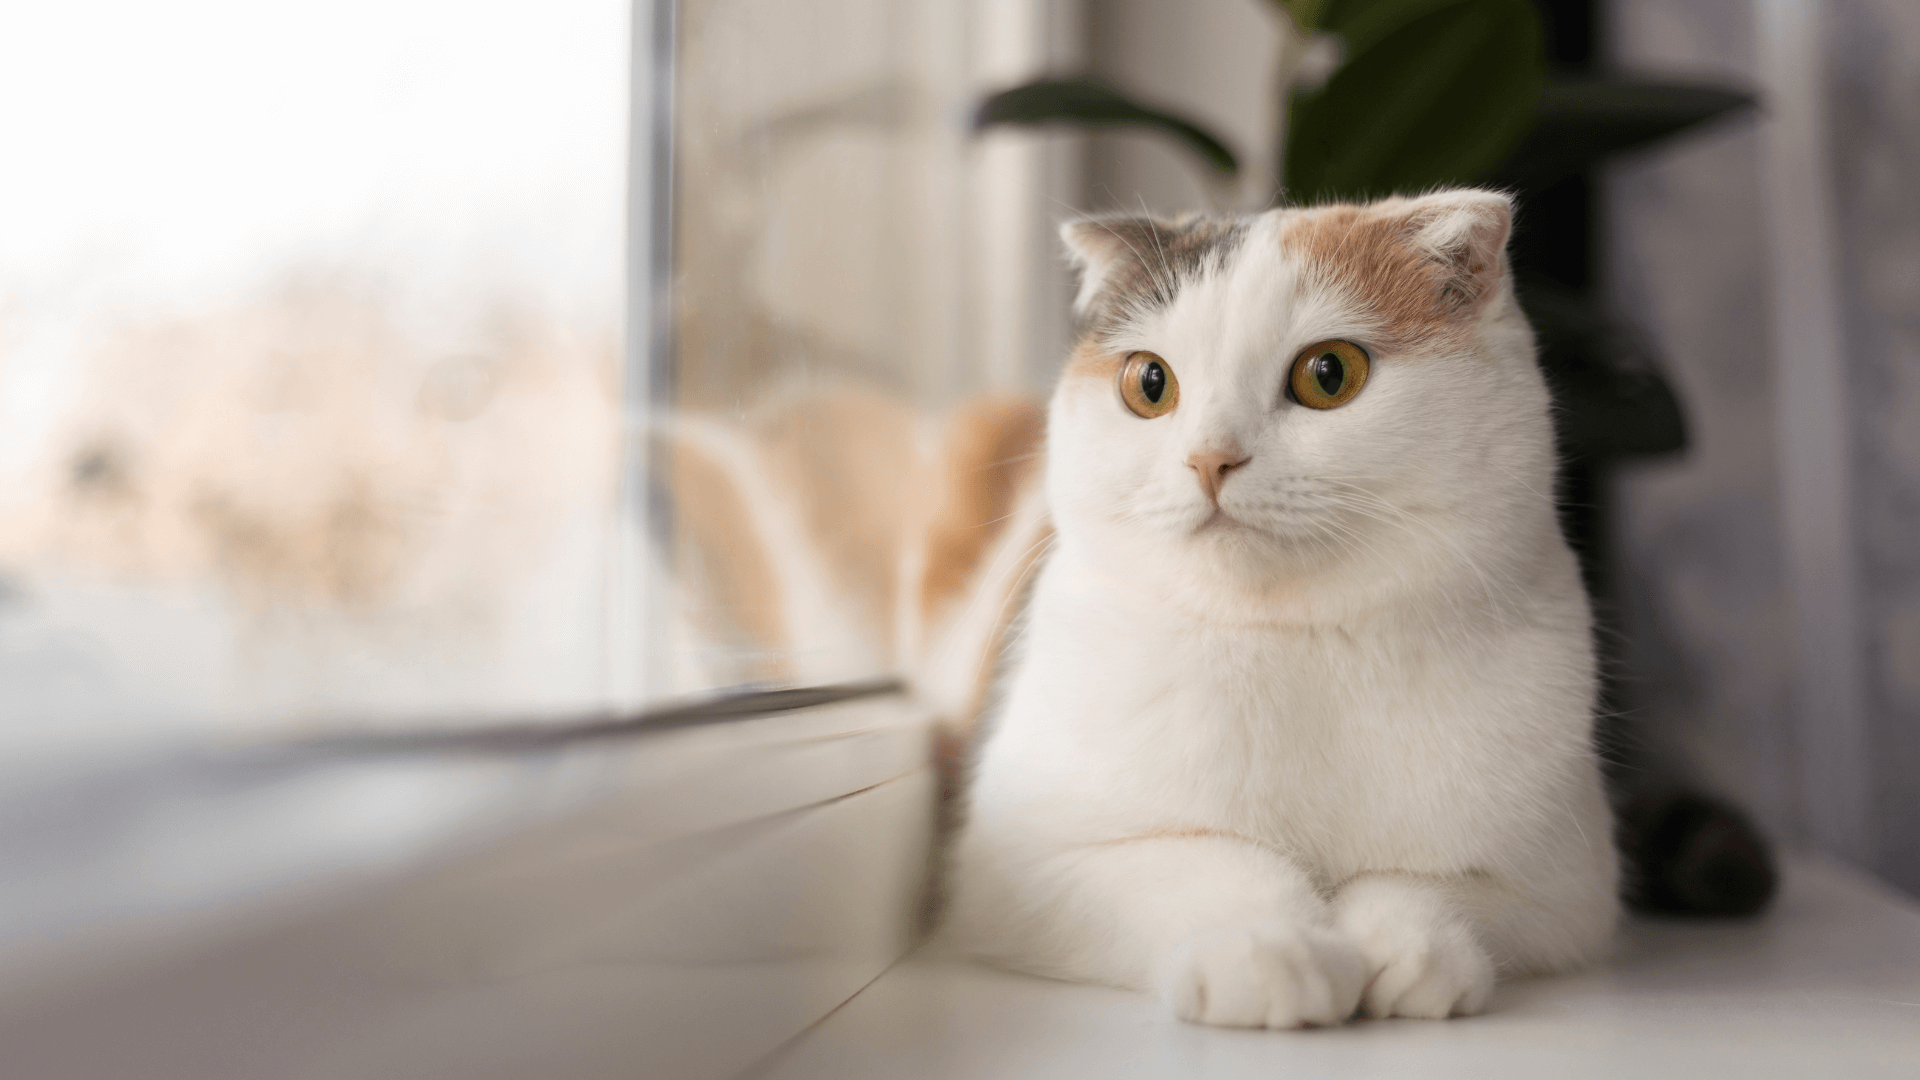 A cat sitting on a window sill